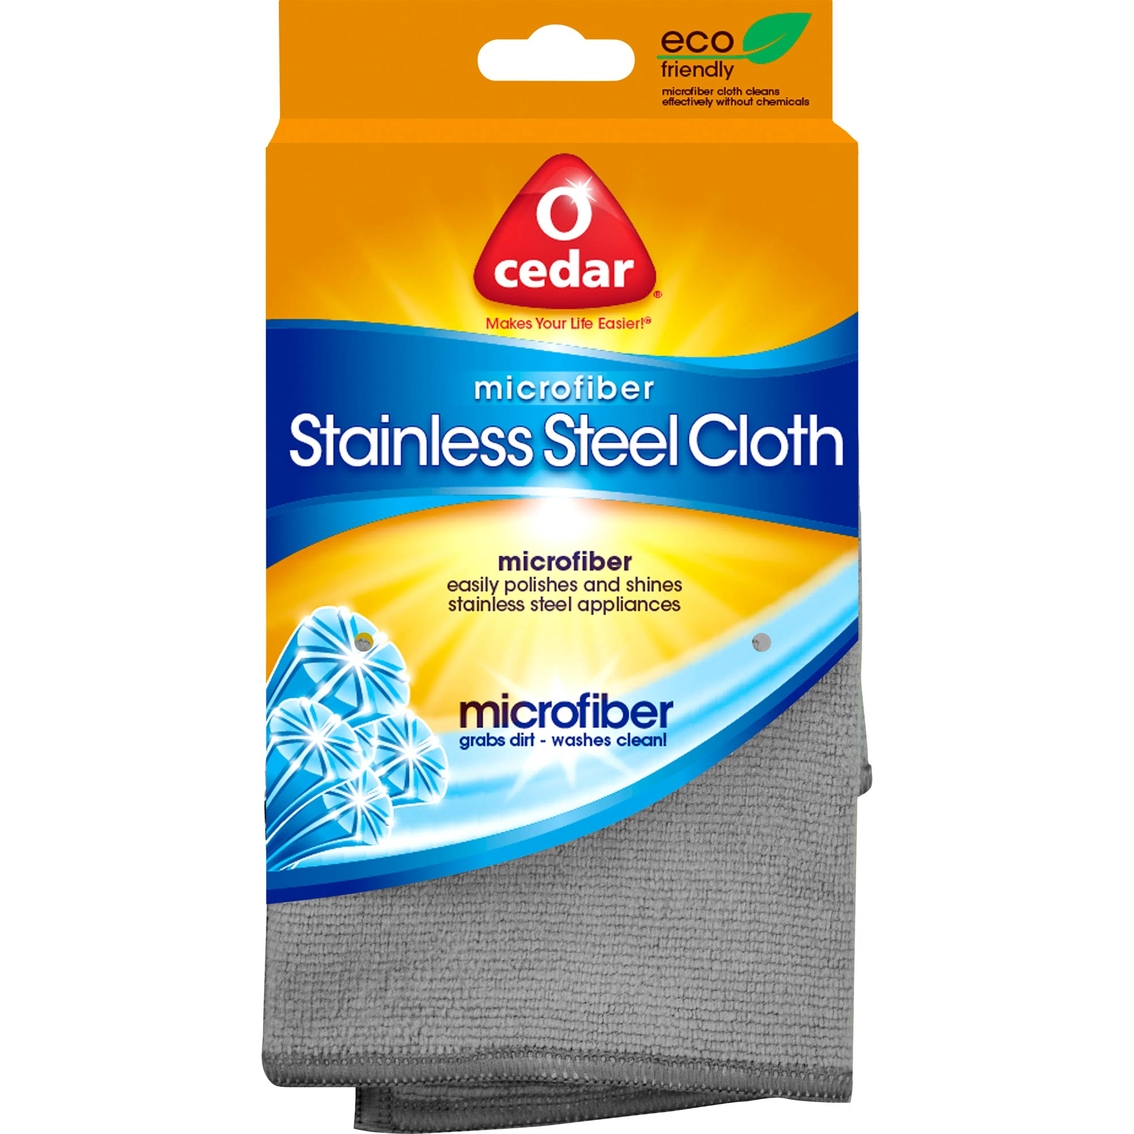 O-cedar Microfiber Stainless Steel Cloth